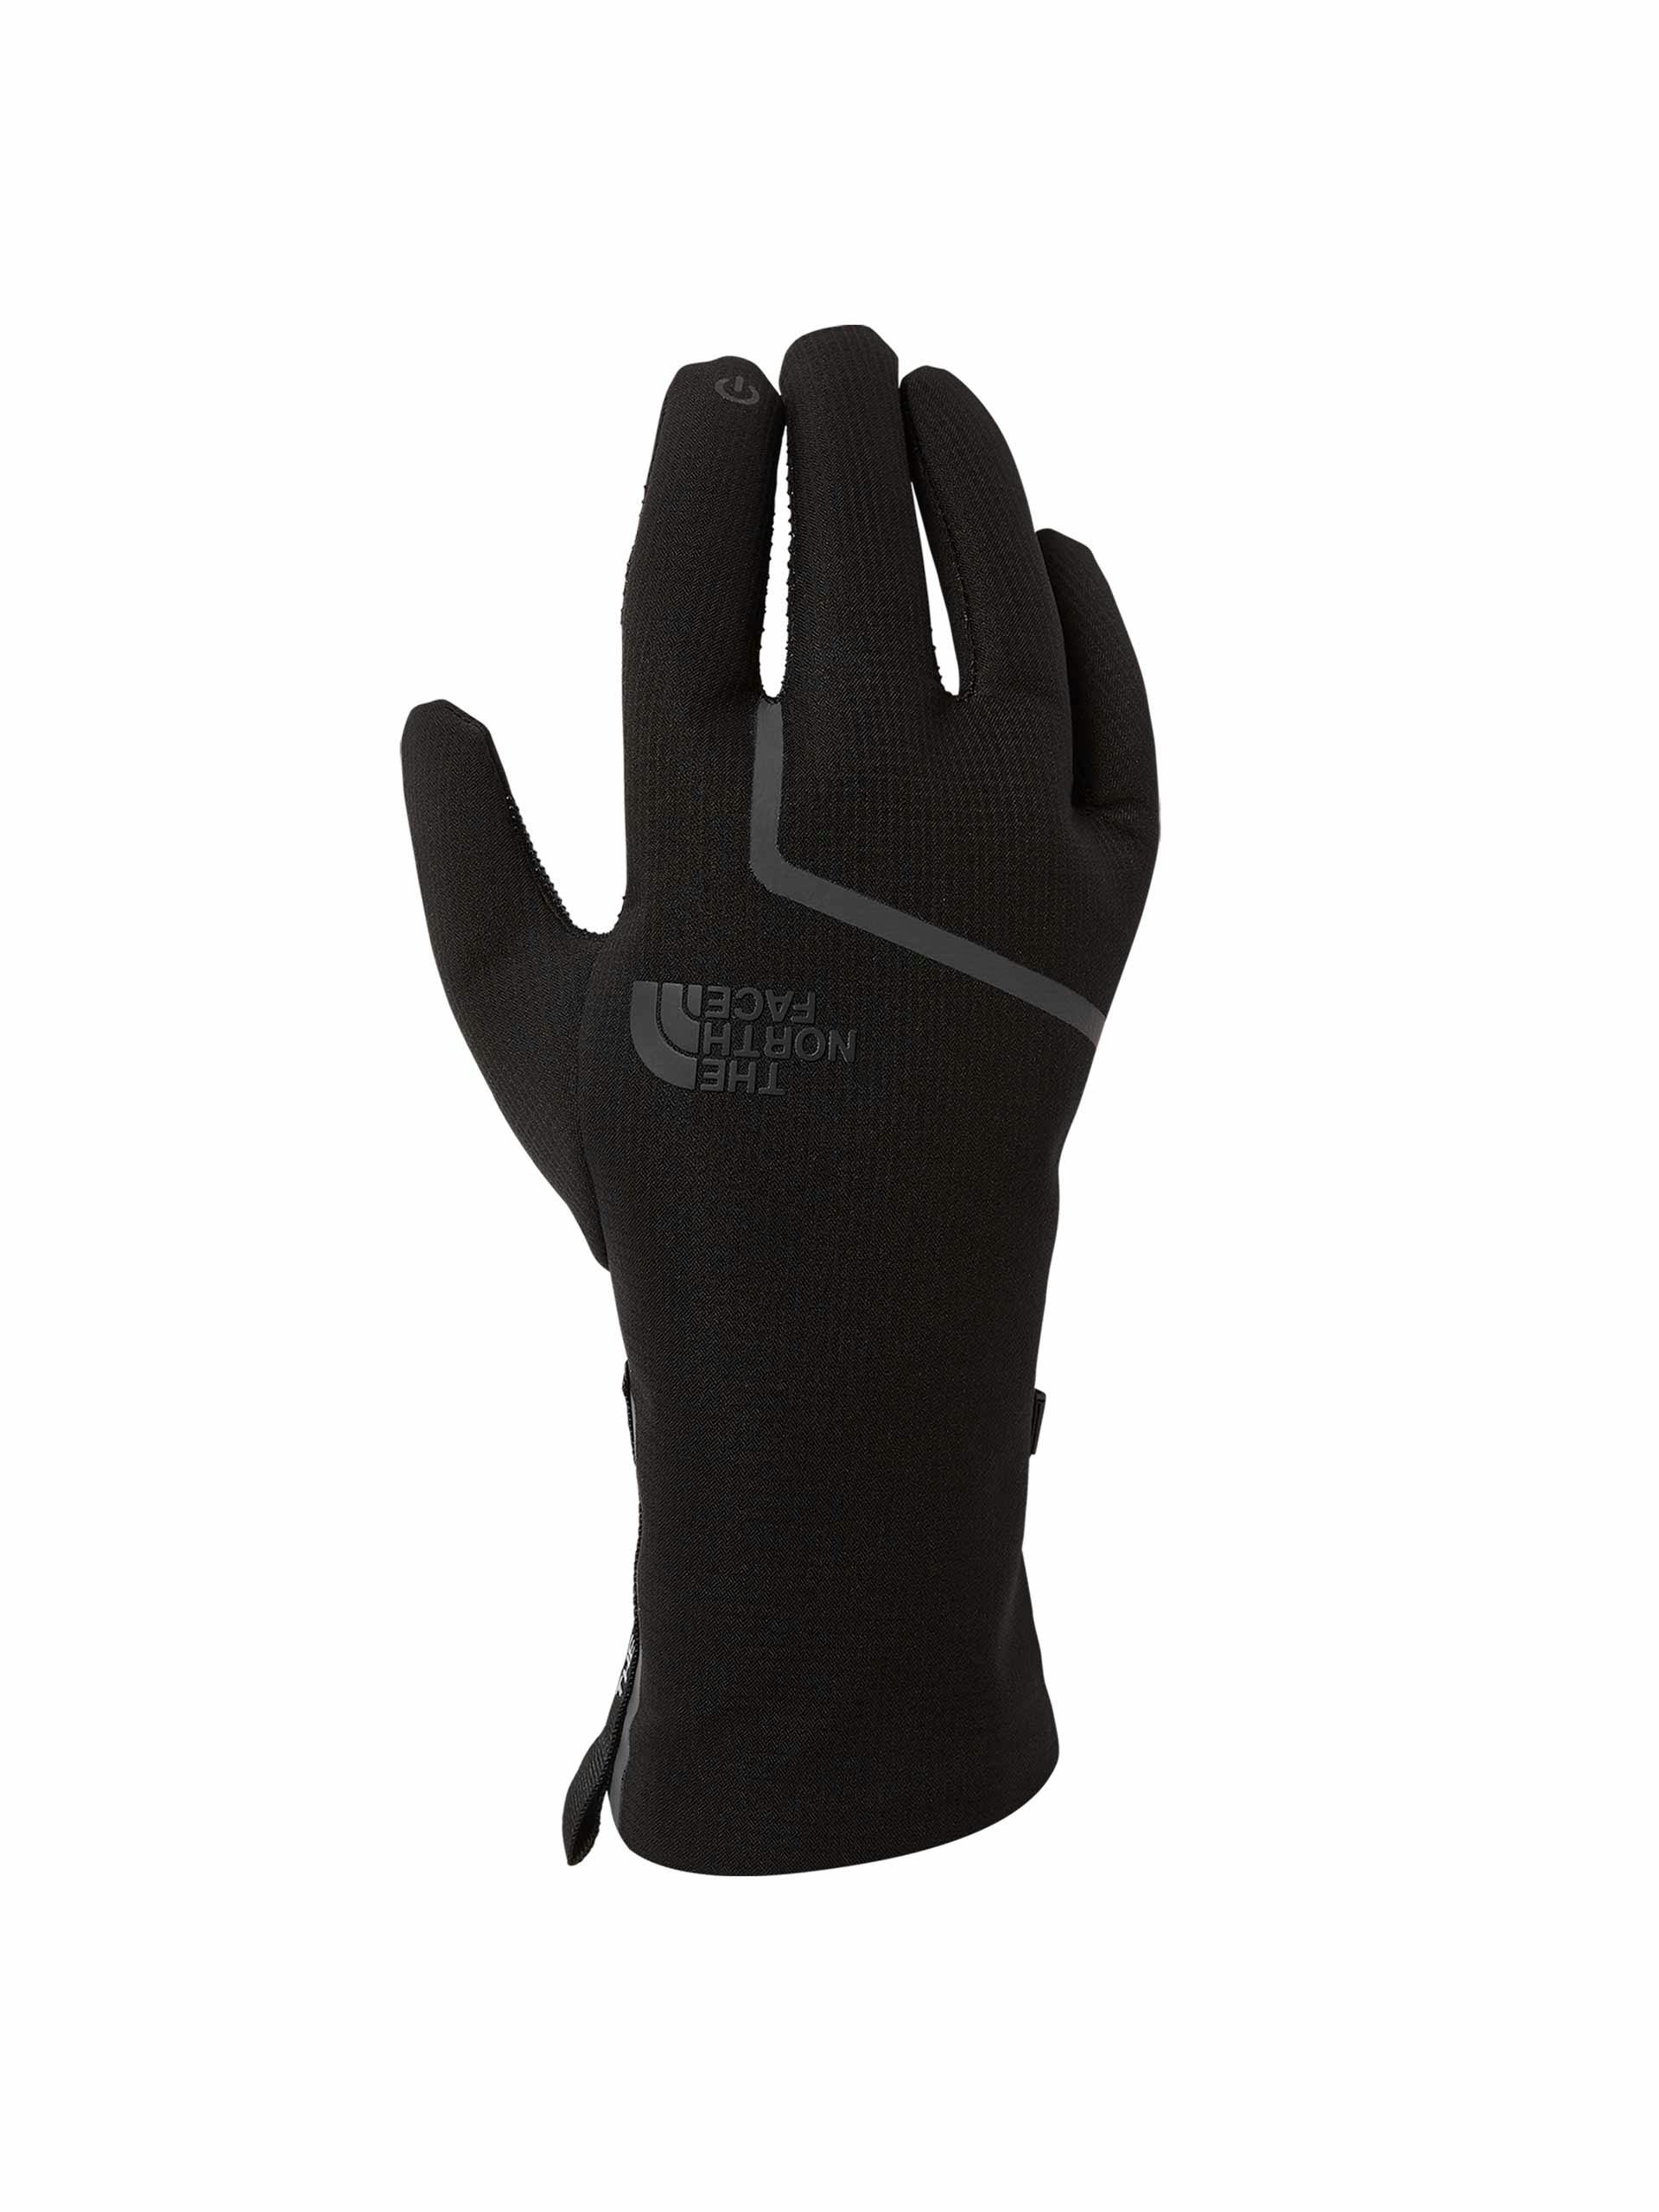 Closefit softshell gloves